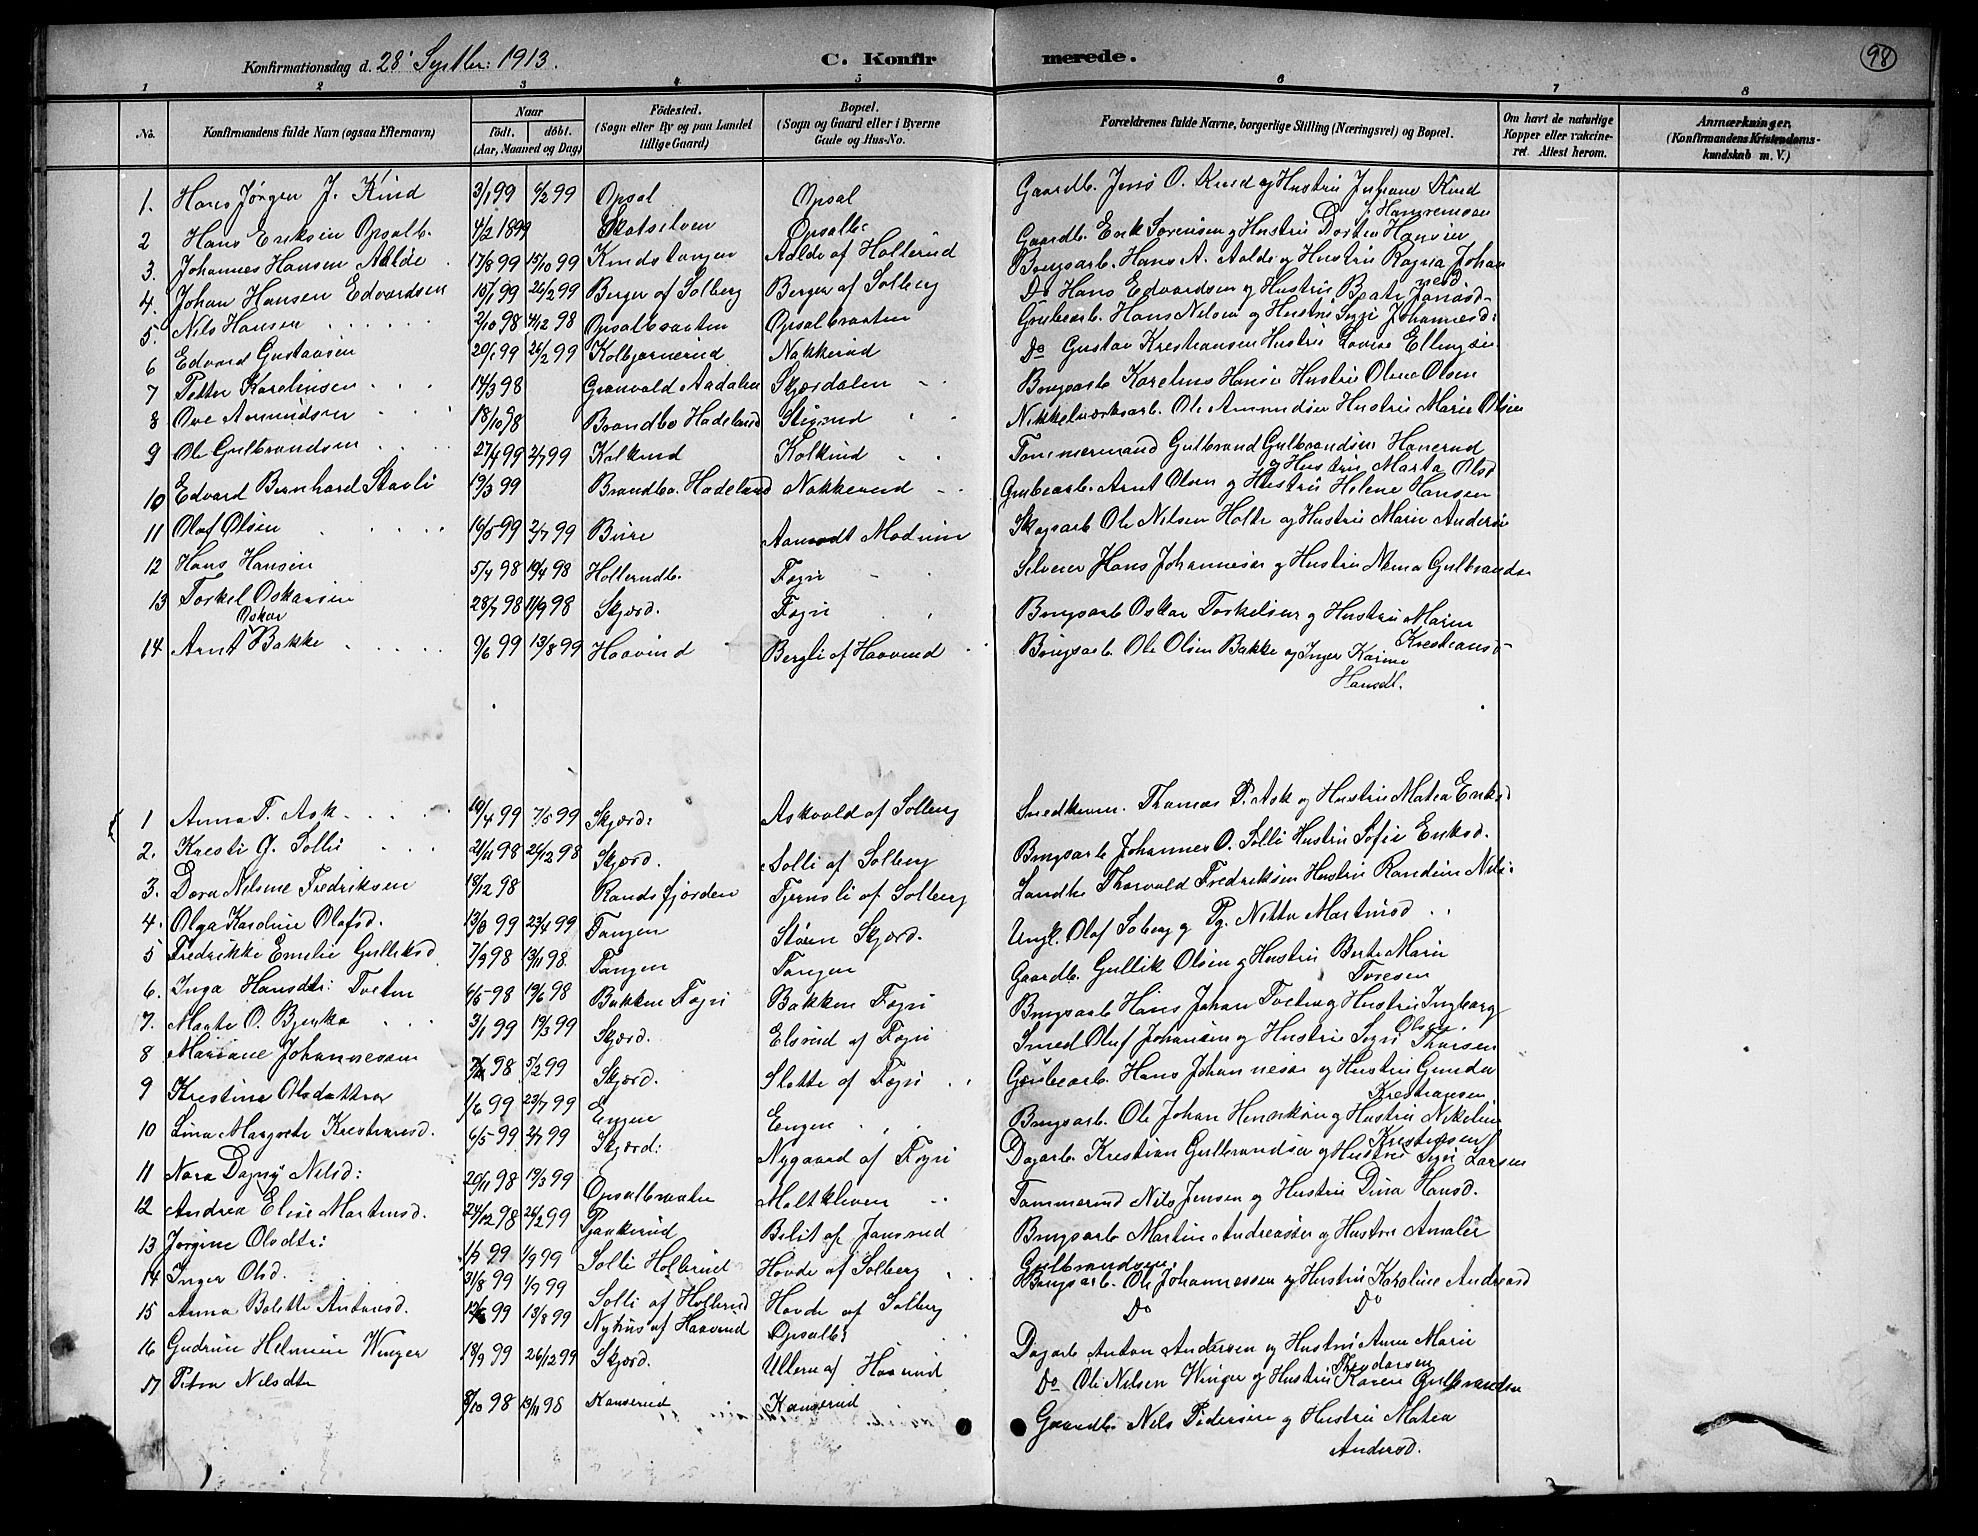 Parish Registry Sako Hole Kirkeboker G Gb L0004 Parish Register Copy No Ii 4 1901 1916 P 98 Scanned Archives The National Archives Of Norway